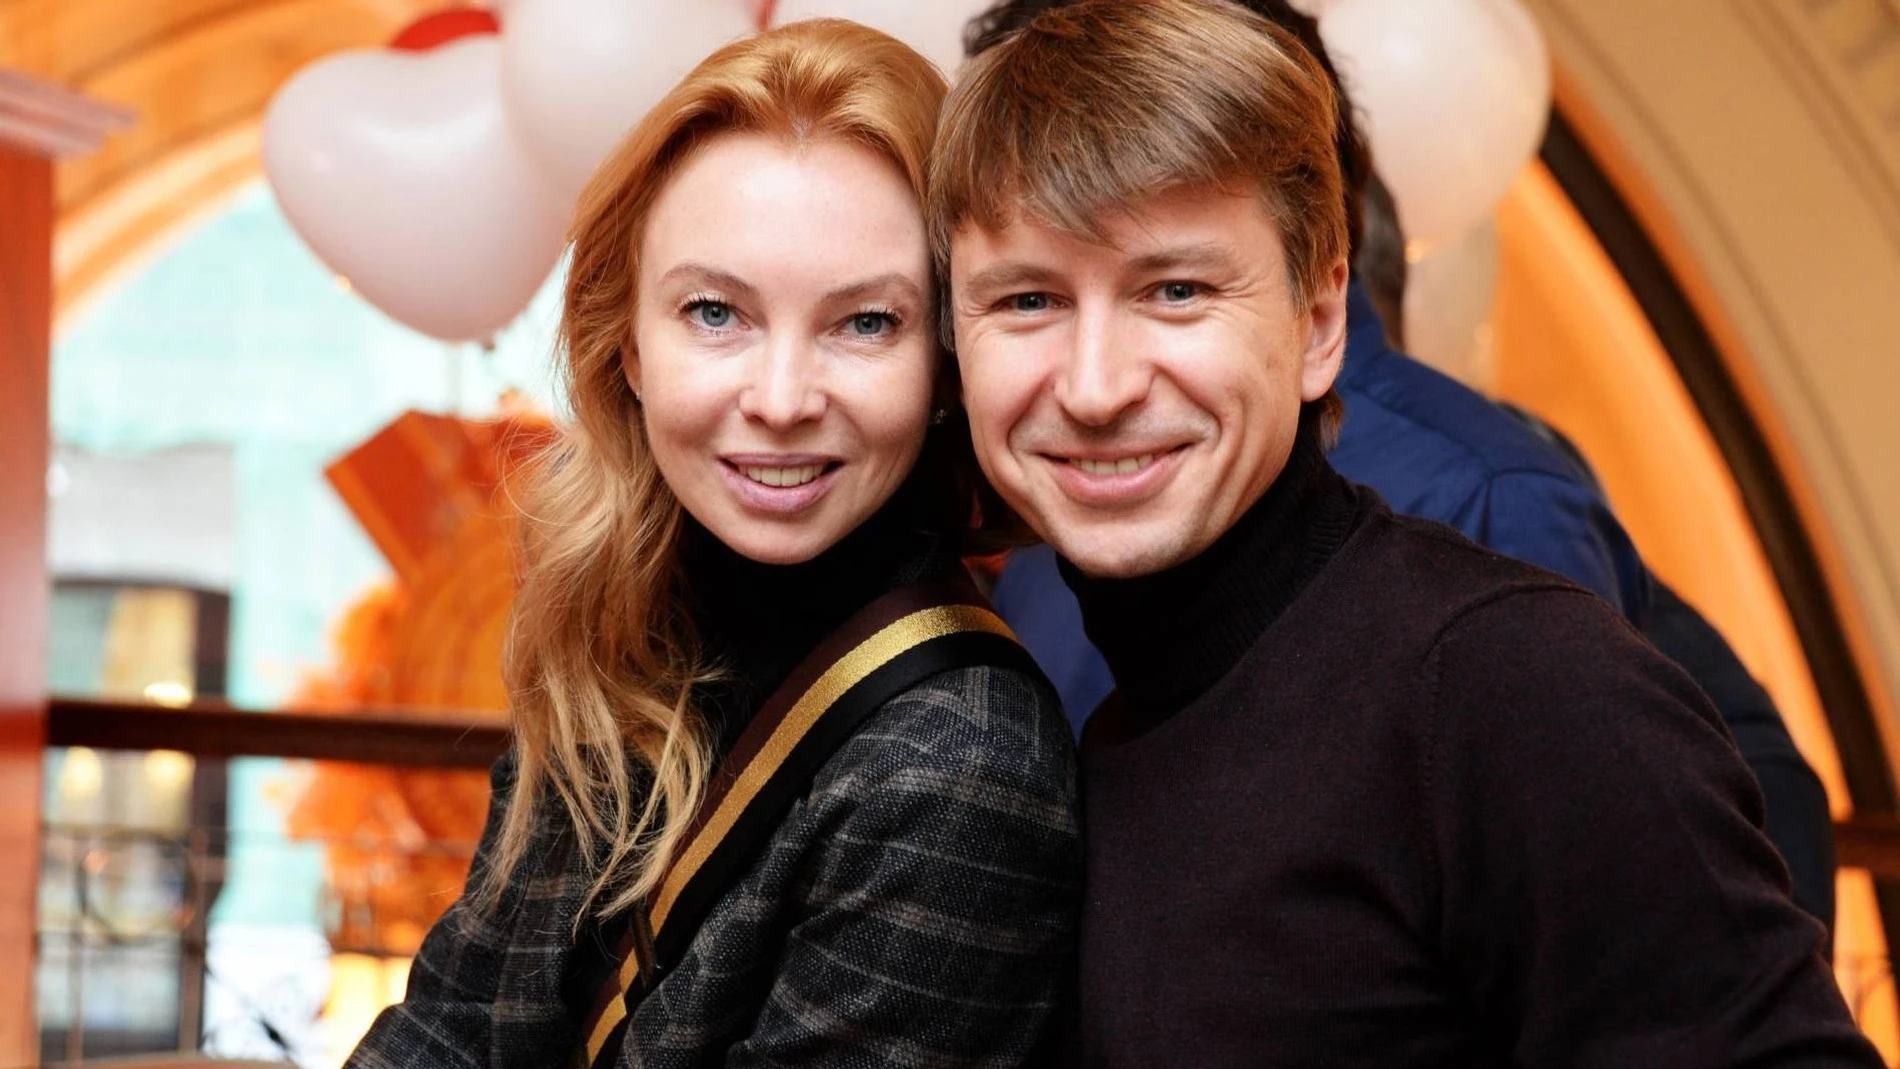 Алексей Ягудин и Татьяна Тотьмянина
Фото: magazine.ru
